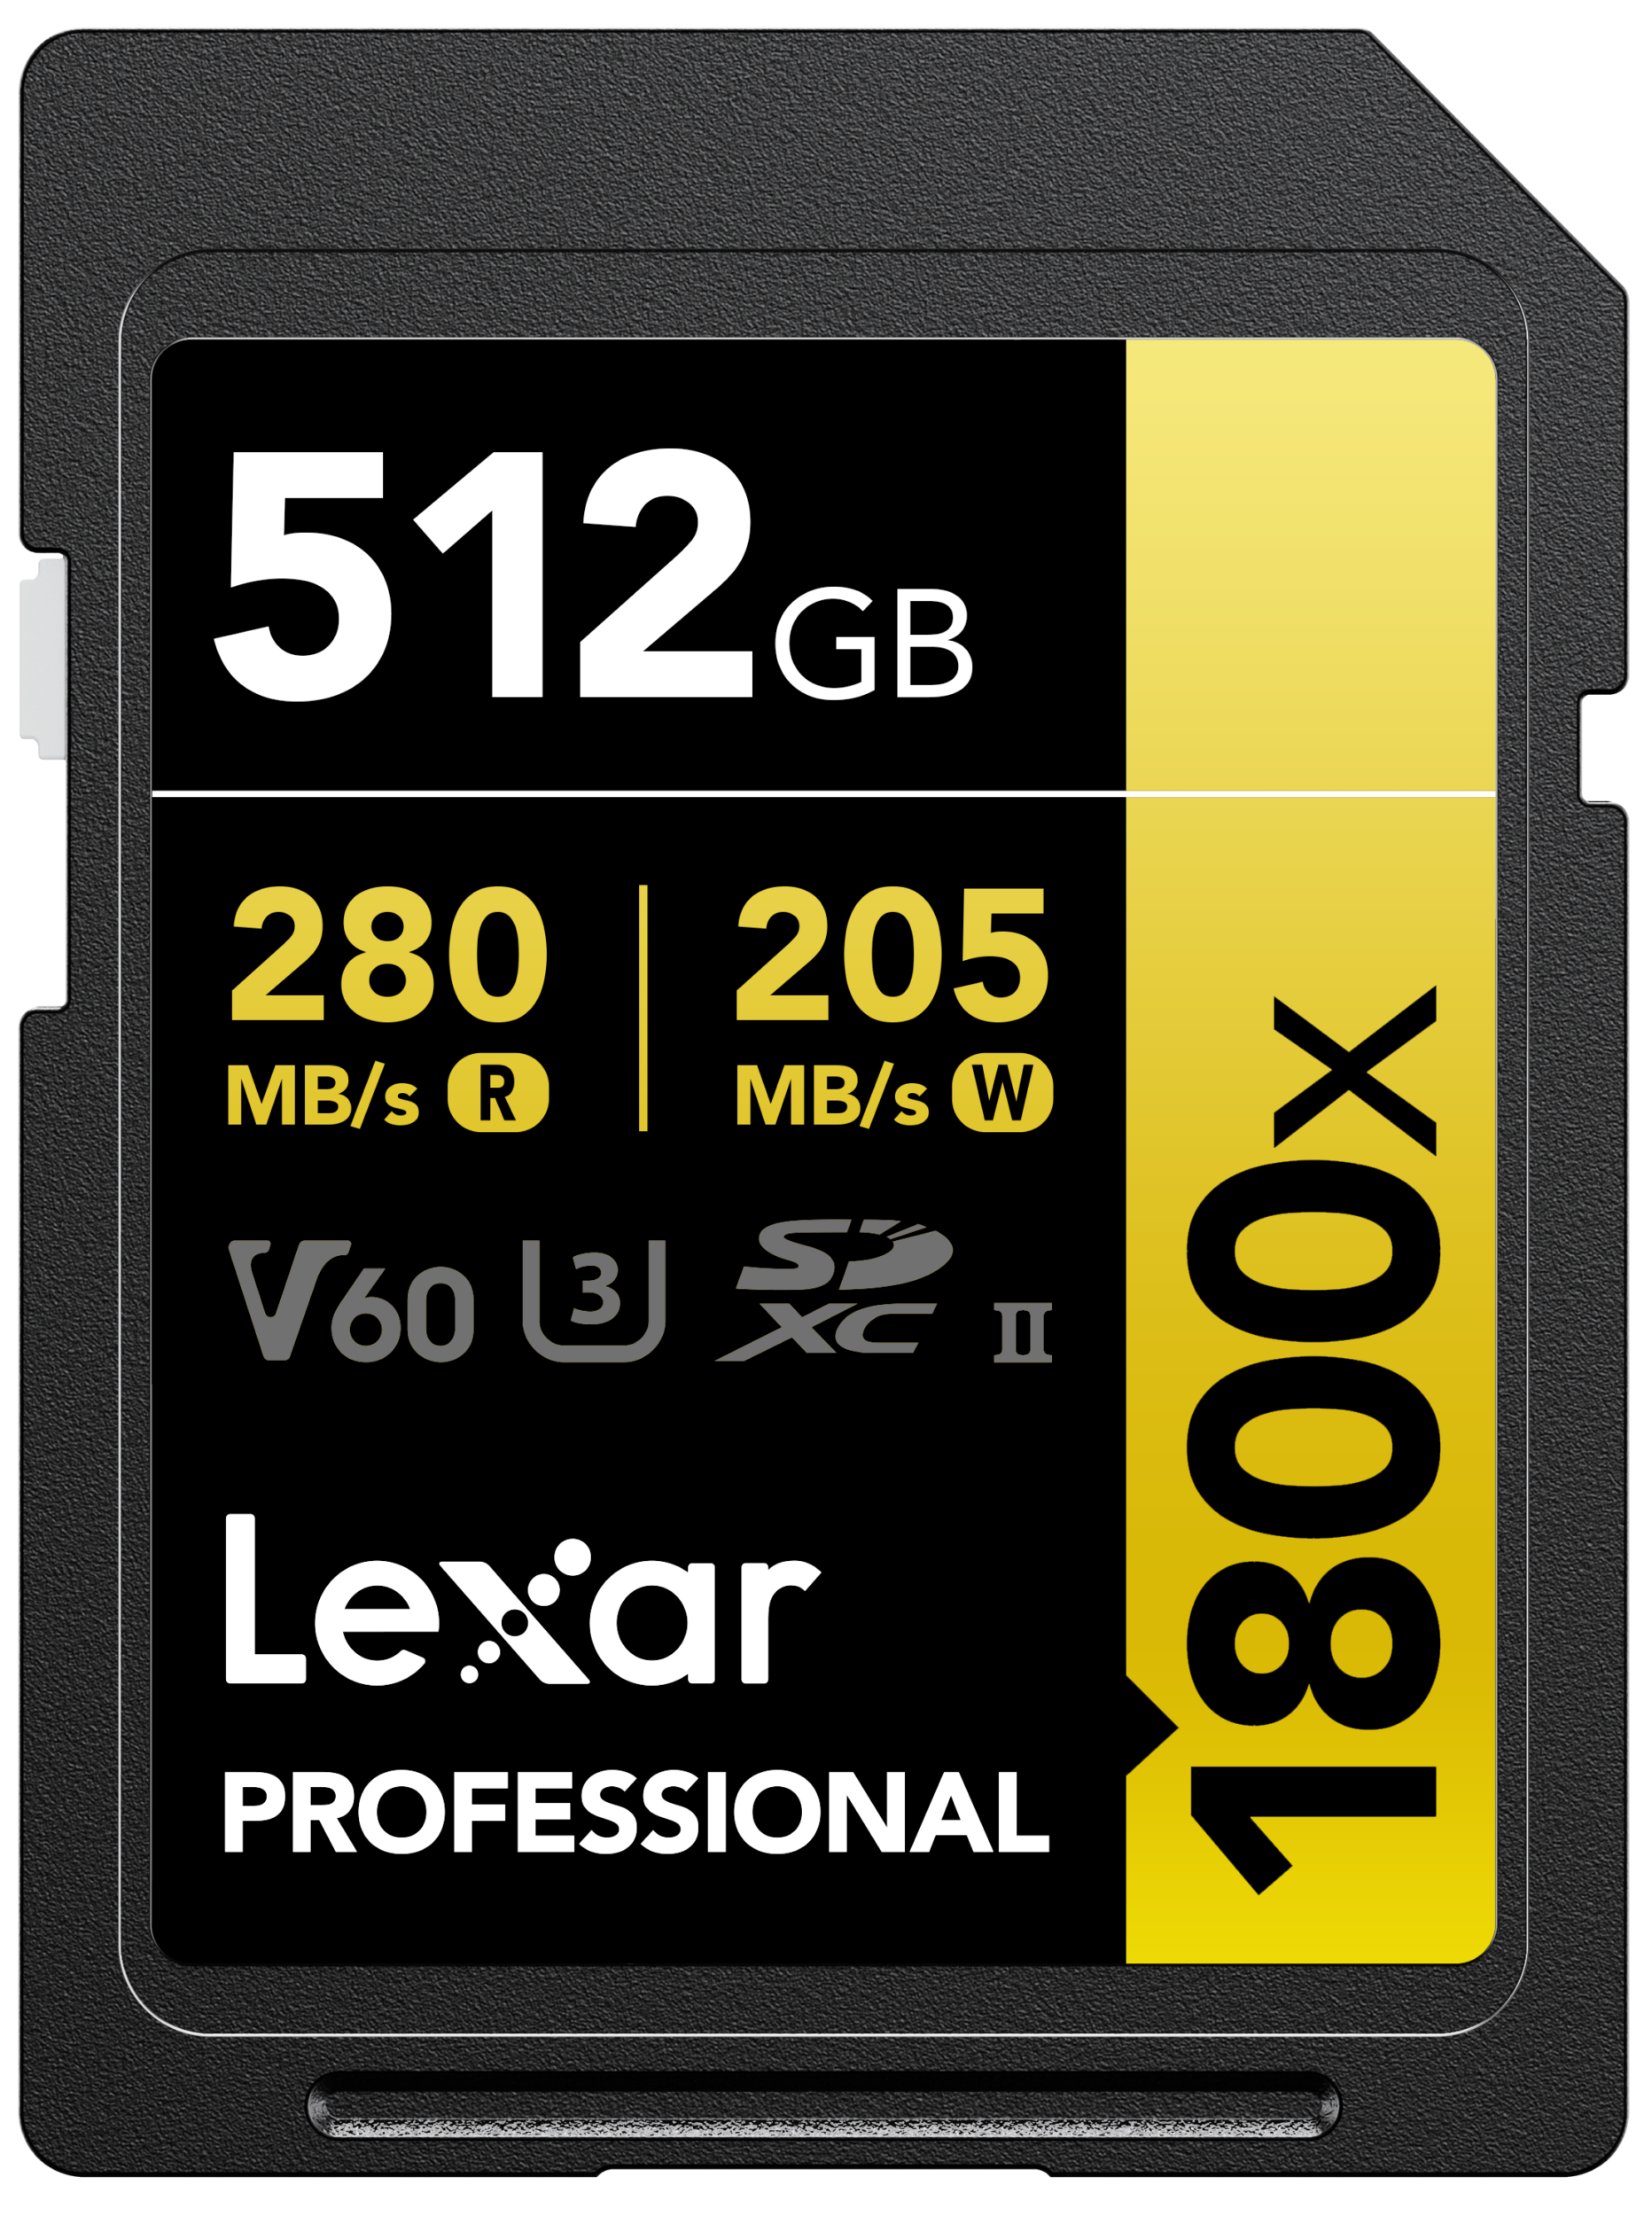 Lexar Announces Performance Enhancements for Memory Card Lineup, New Dual-Card Reader -